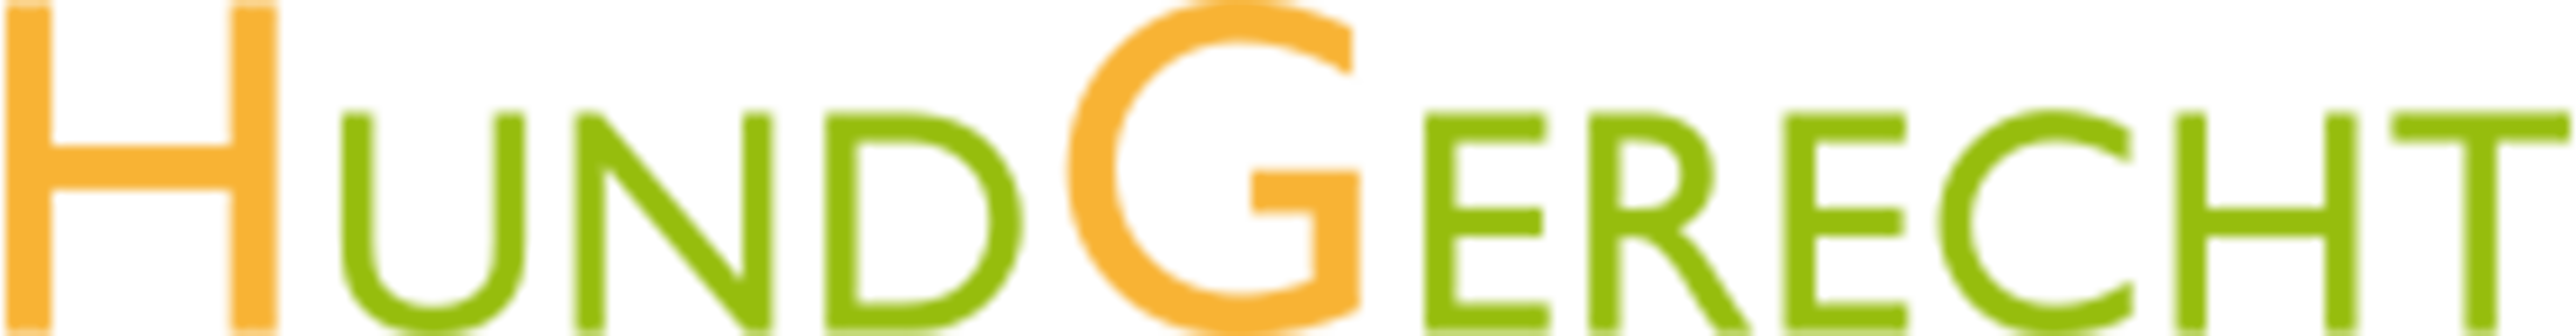 HUNDGERECHT logo-main-text